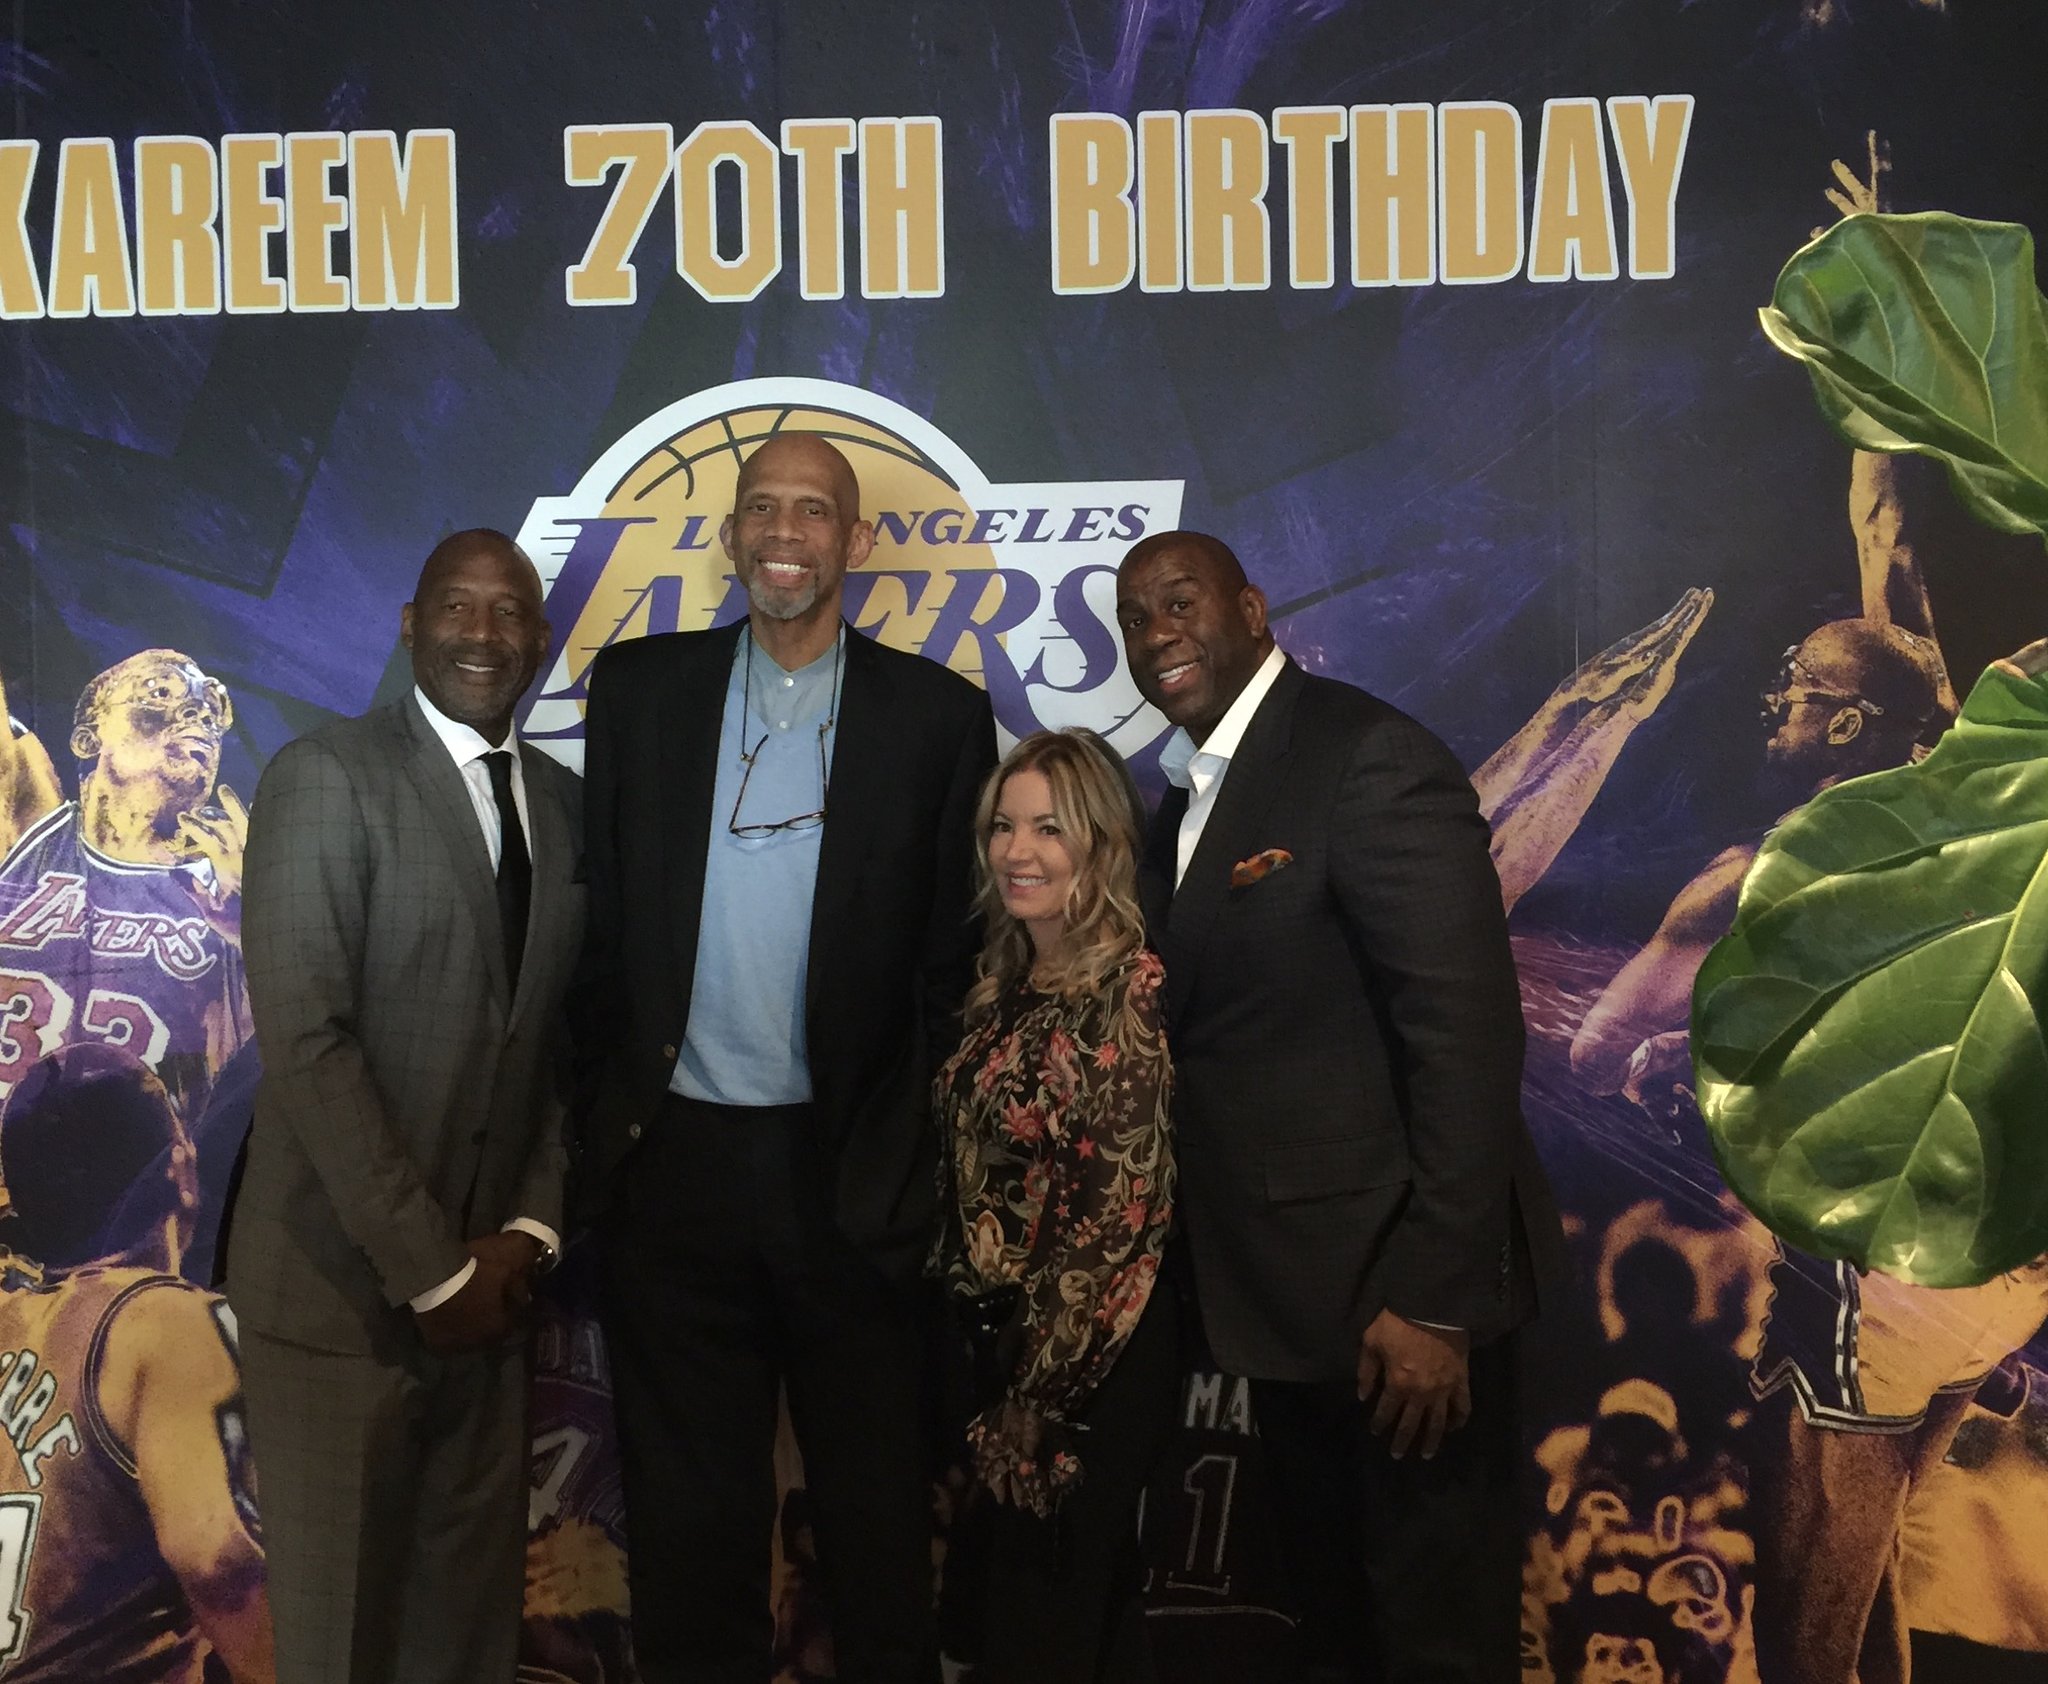 Happy birthday to my good friend and NBA leading scorer of all time Kareem Abdul-Jabbar! 